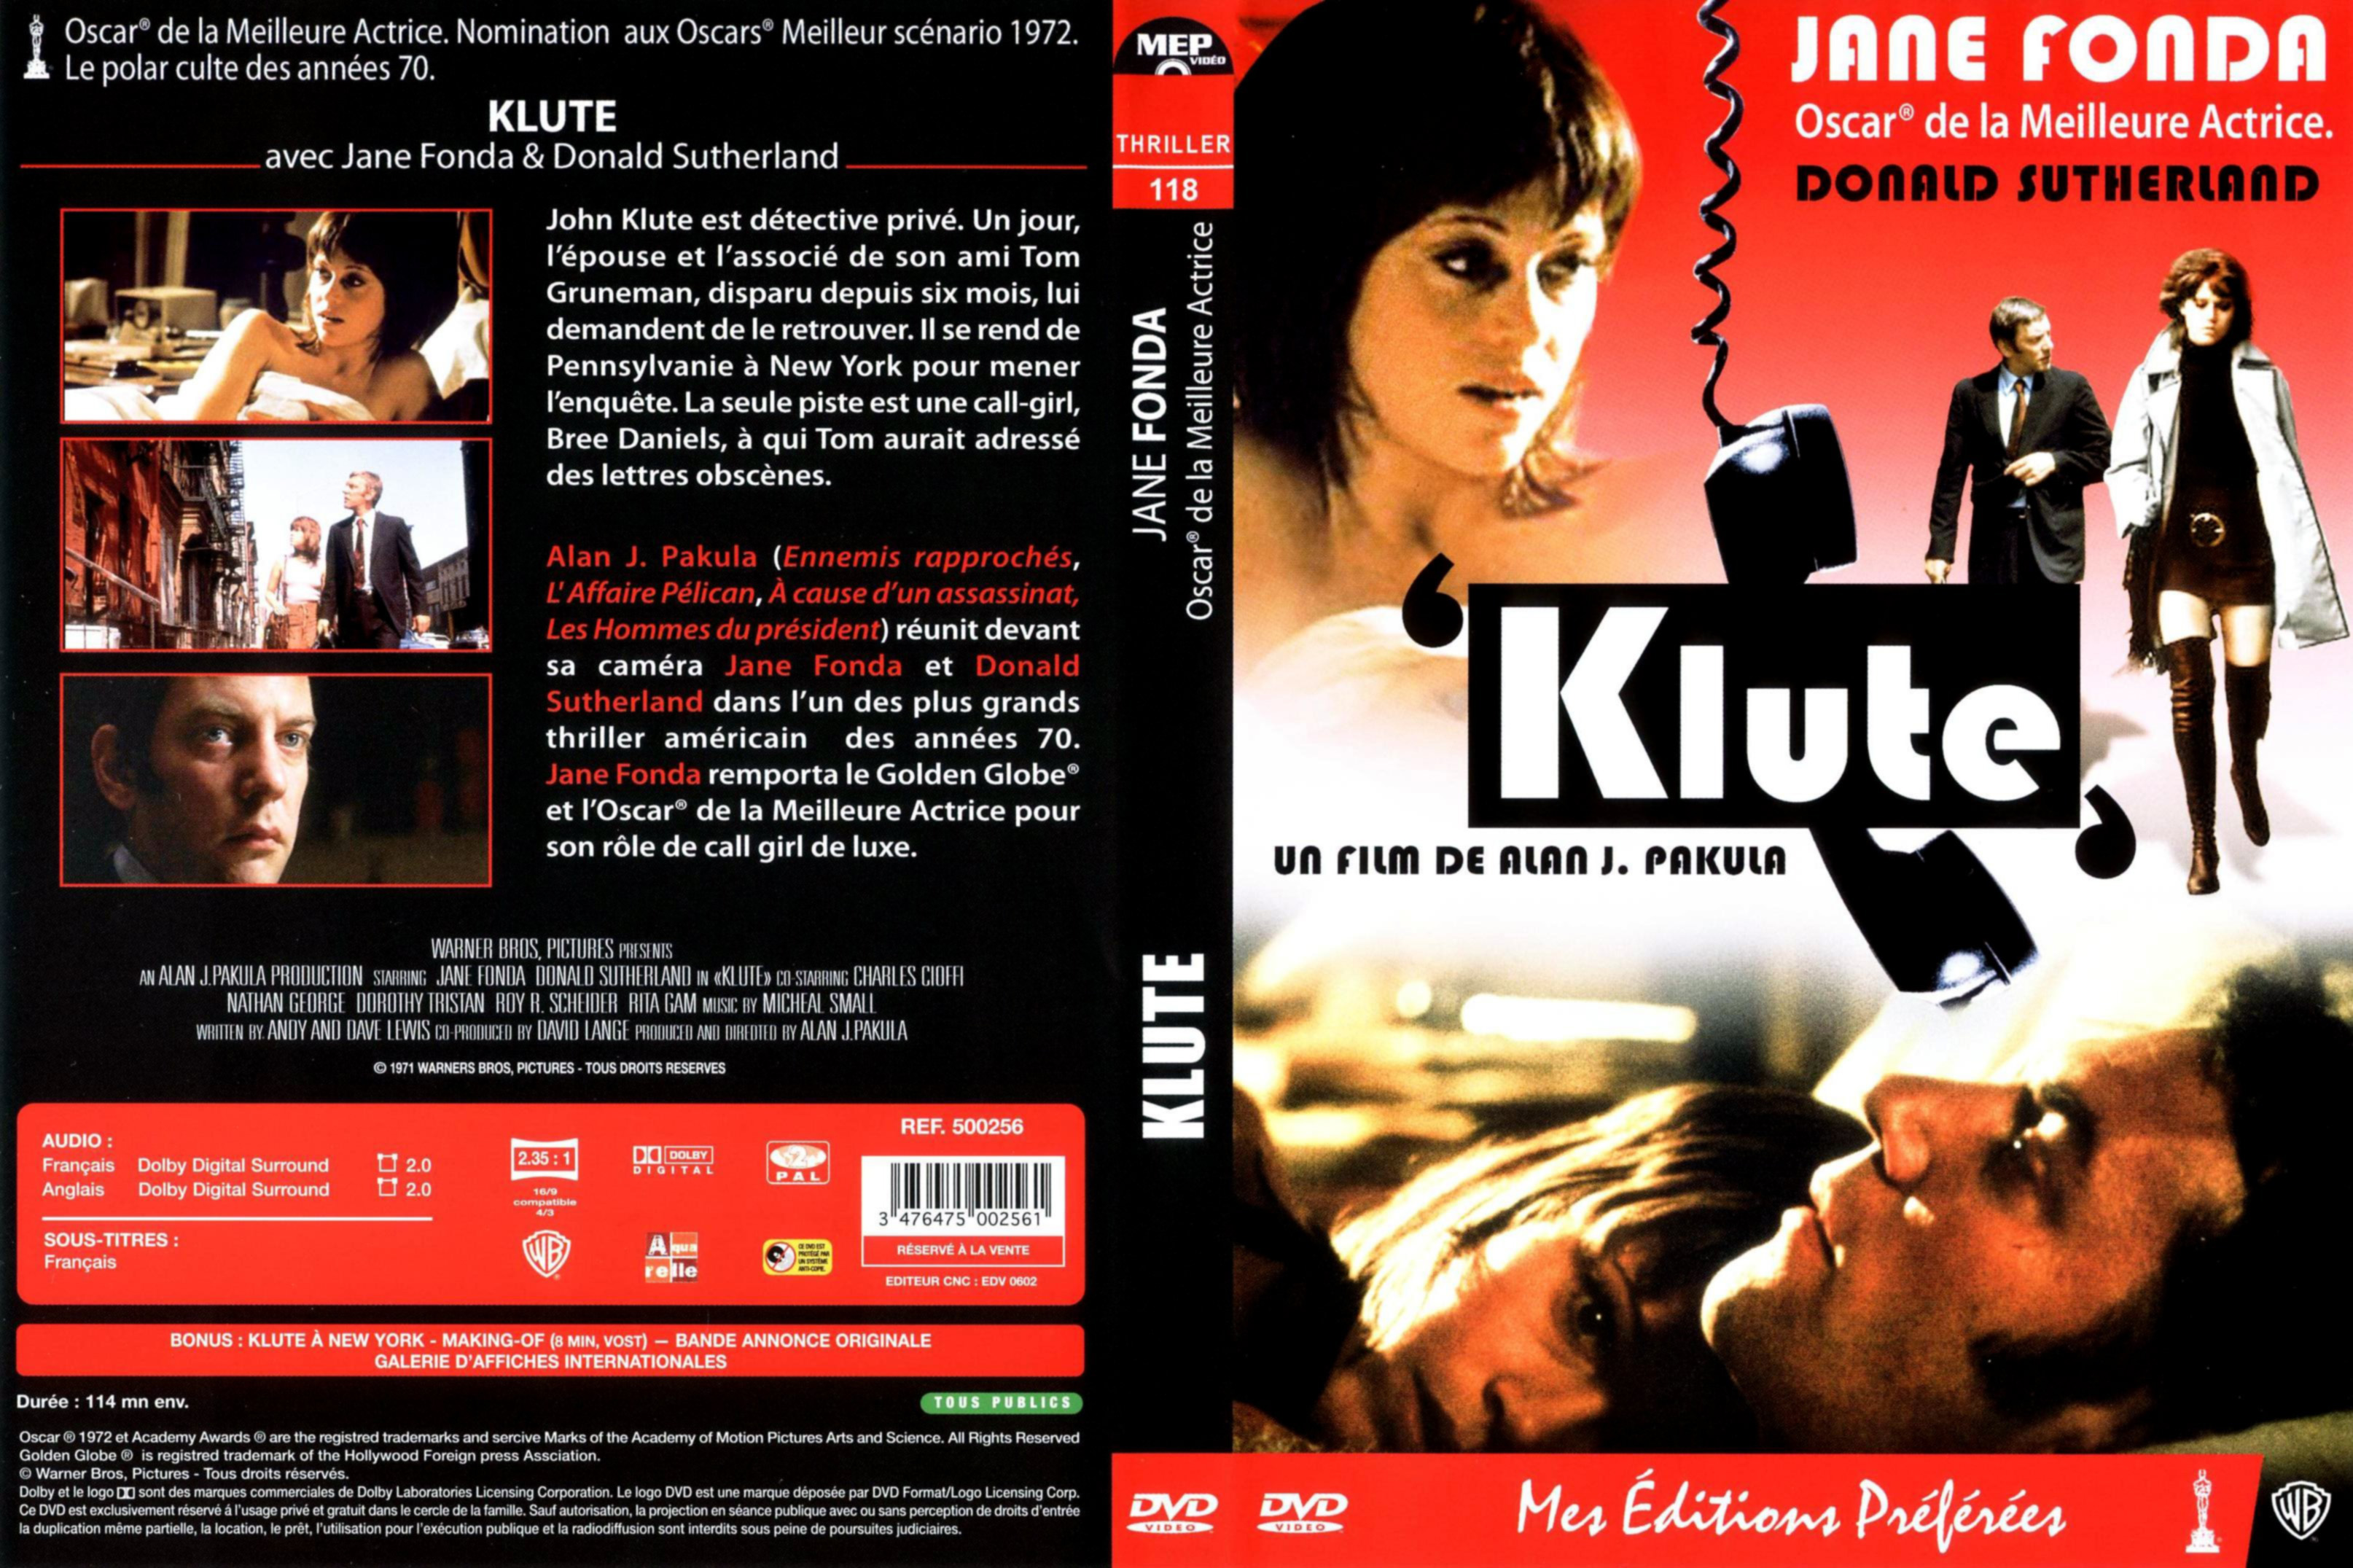 Jaquette DVD Klute v2